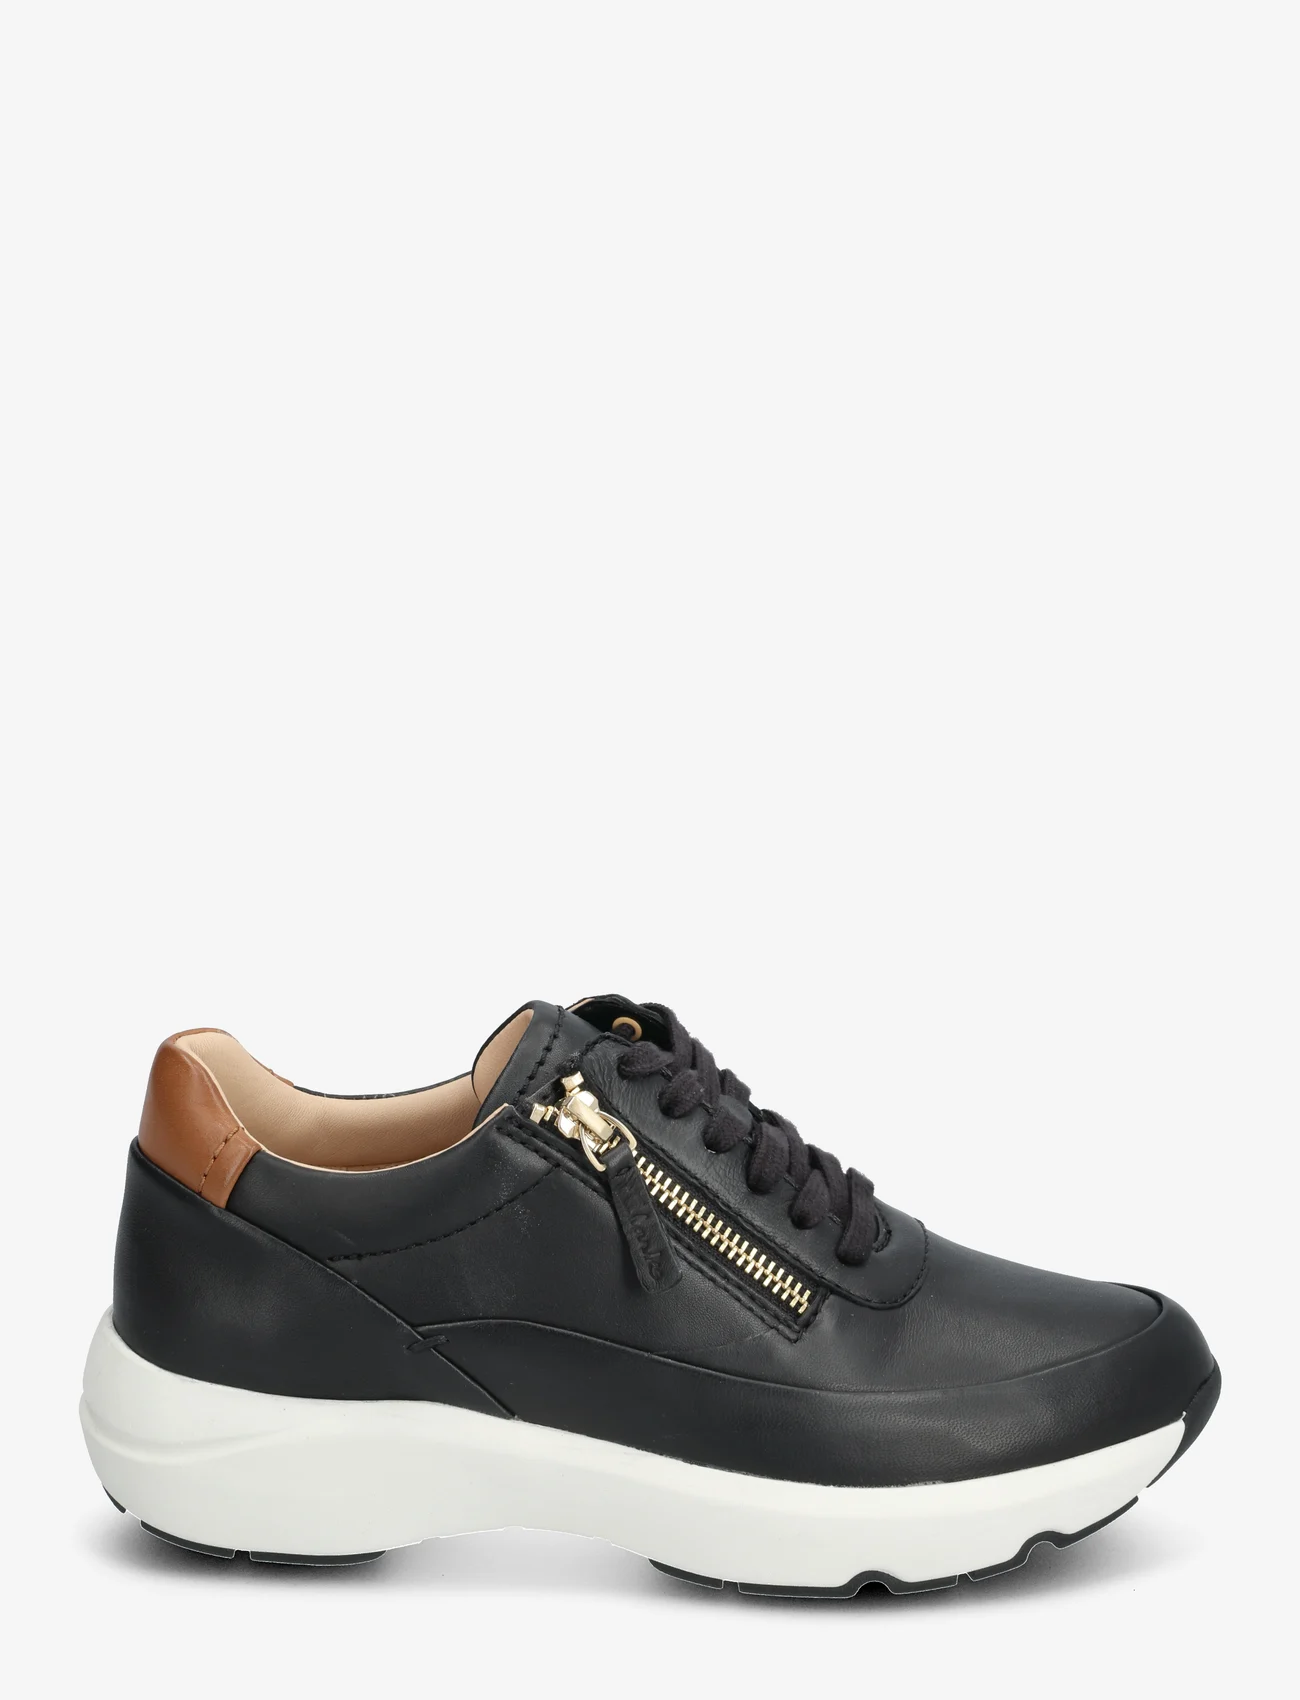 Clarks - Tivoli Zip D - niedrige sneakers - 1216 black leather - 1